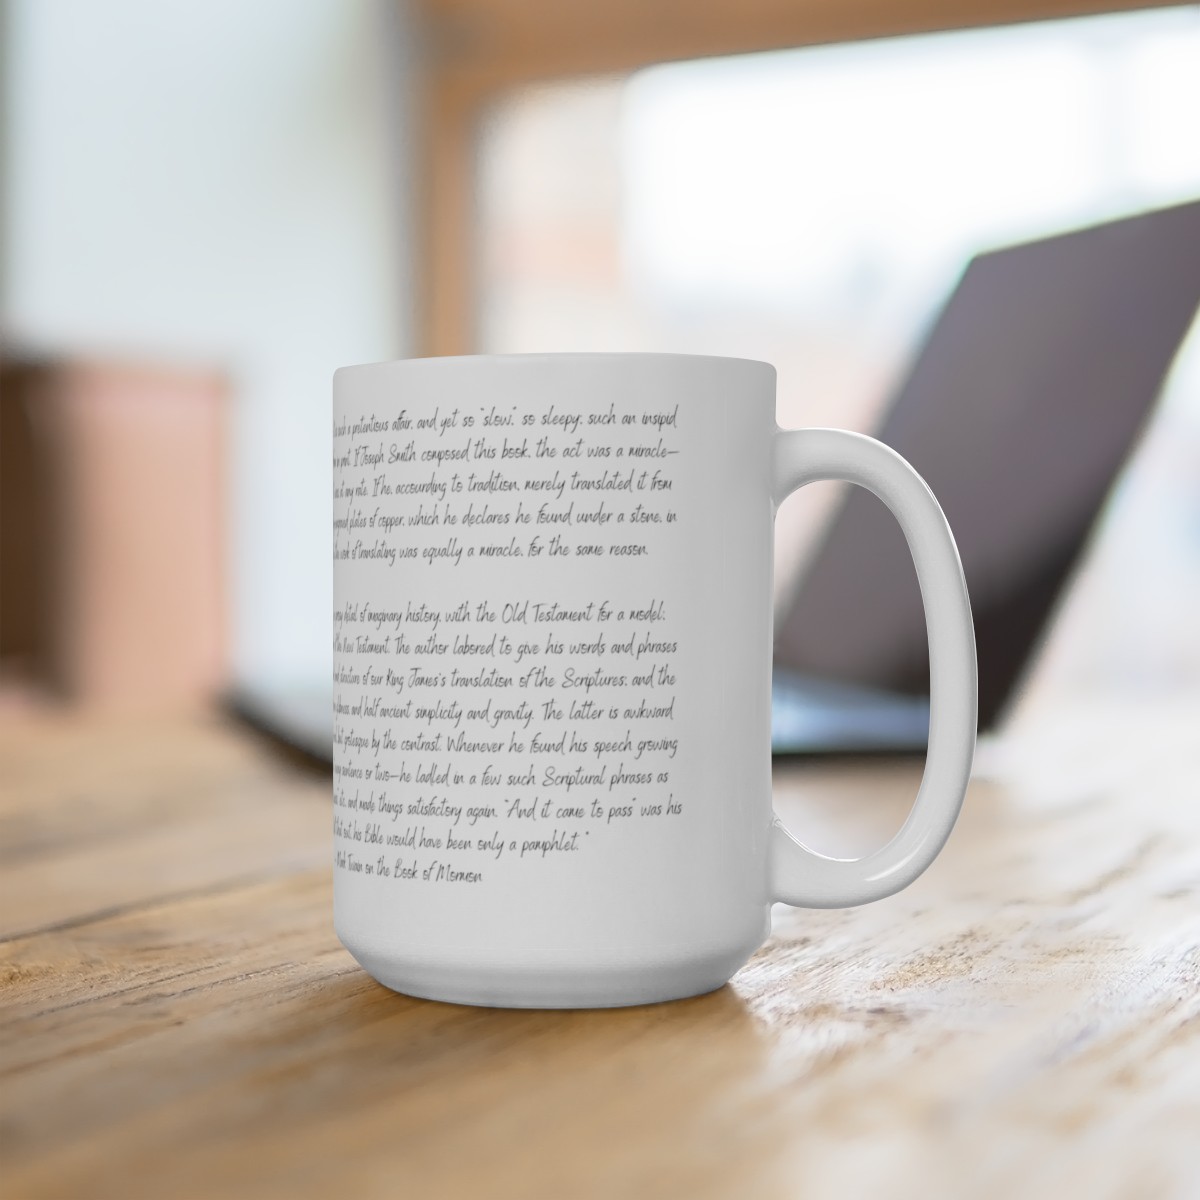 Mark Twain Mug: Witty White 15 oz Mug with a Critique of Book of Mormon product thumbnail image